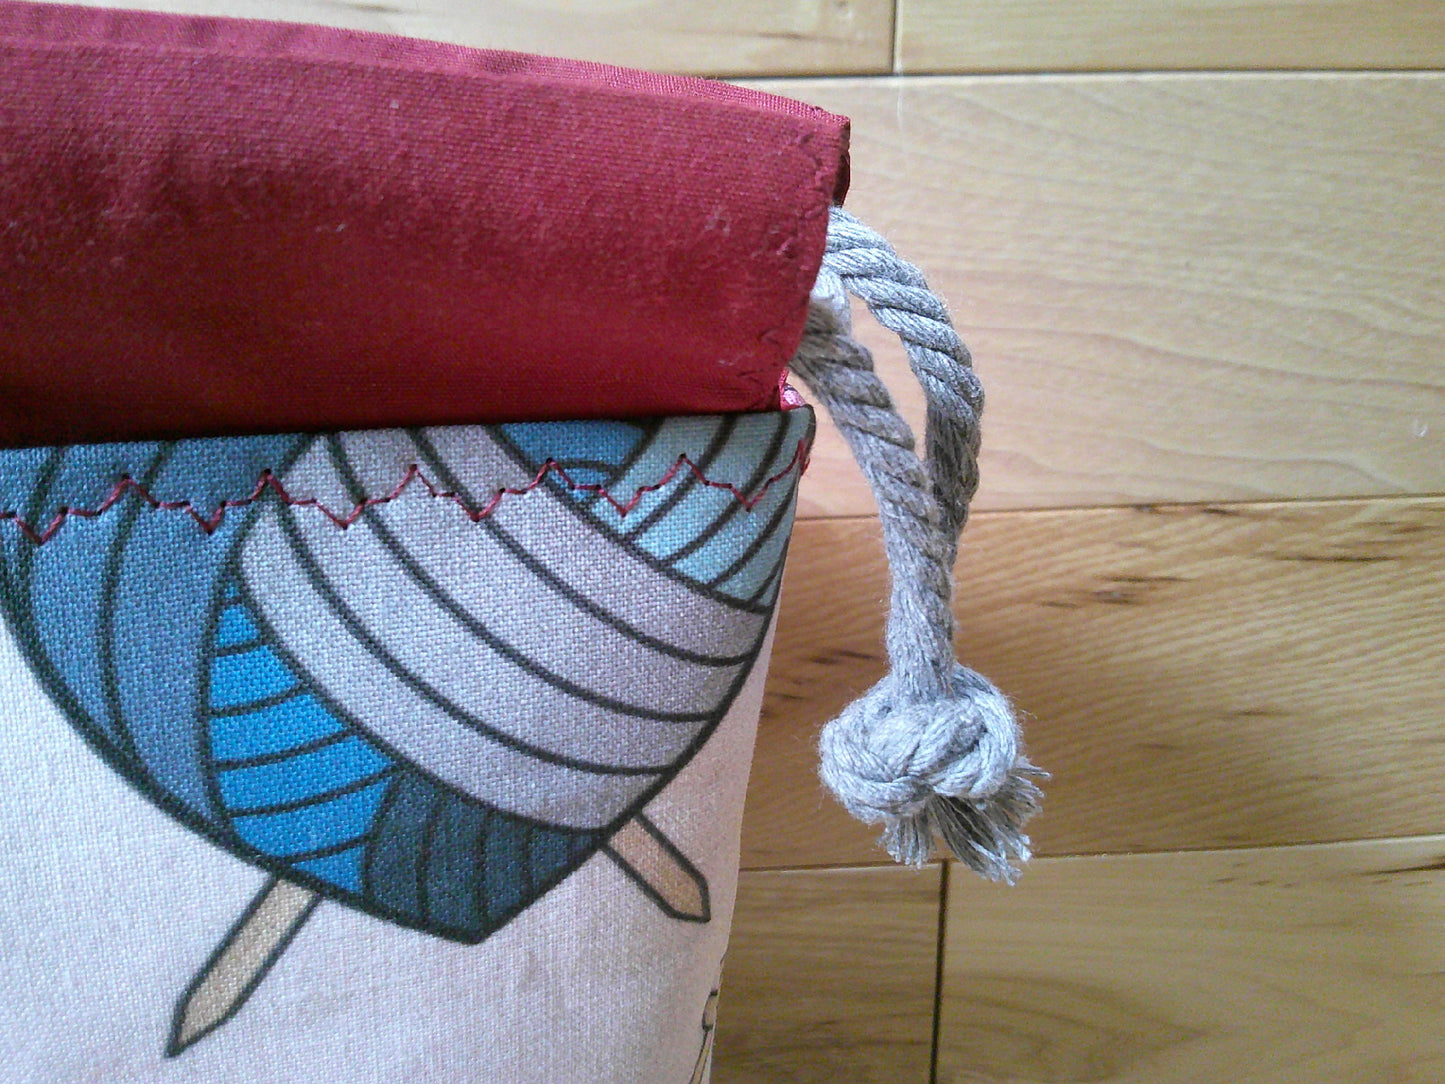 Heart yarn balls w/ knitting needles project bags